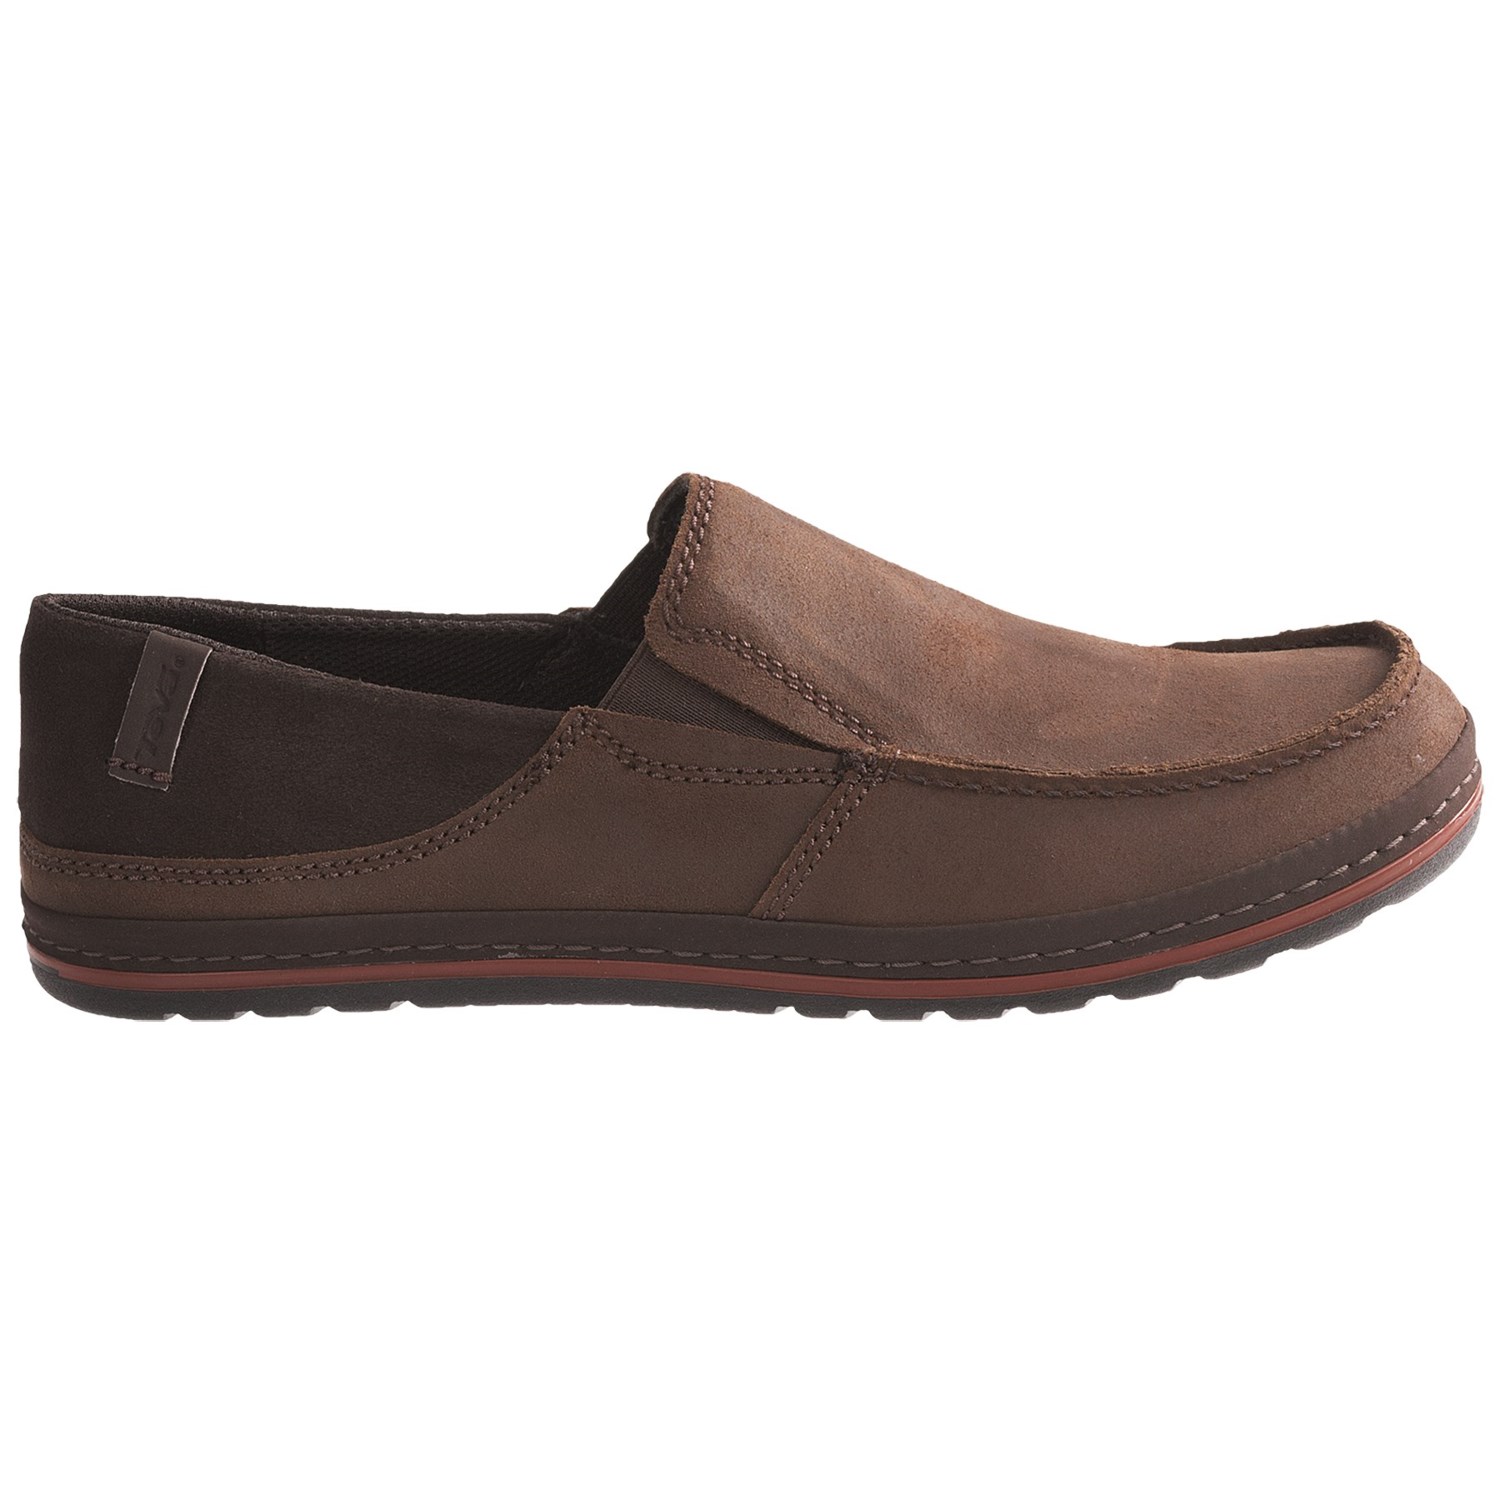 Teva Clifton Creek Shoes (For Men) 6541P - Save 34%